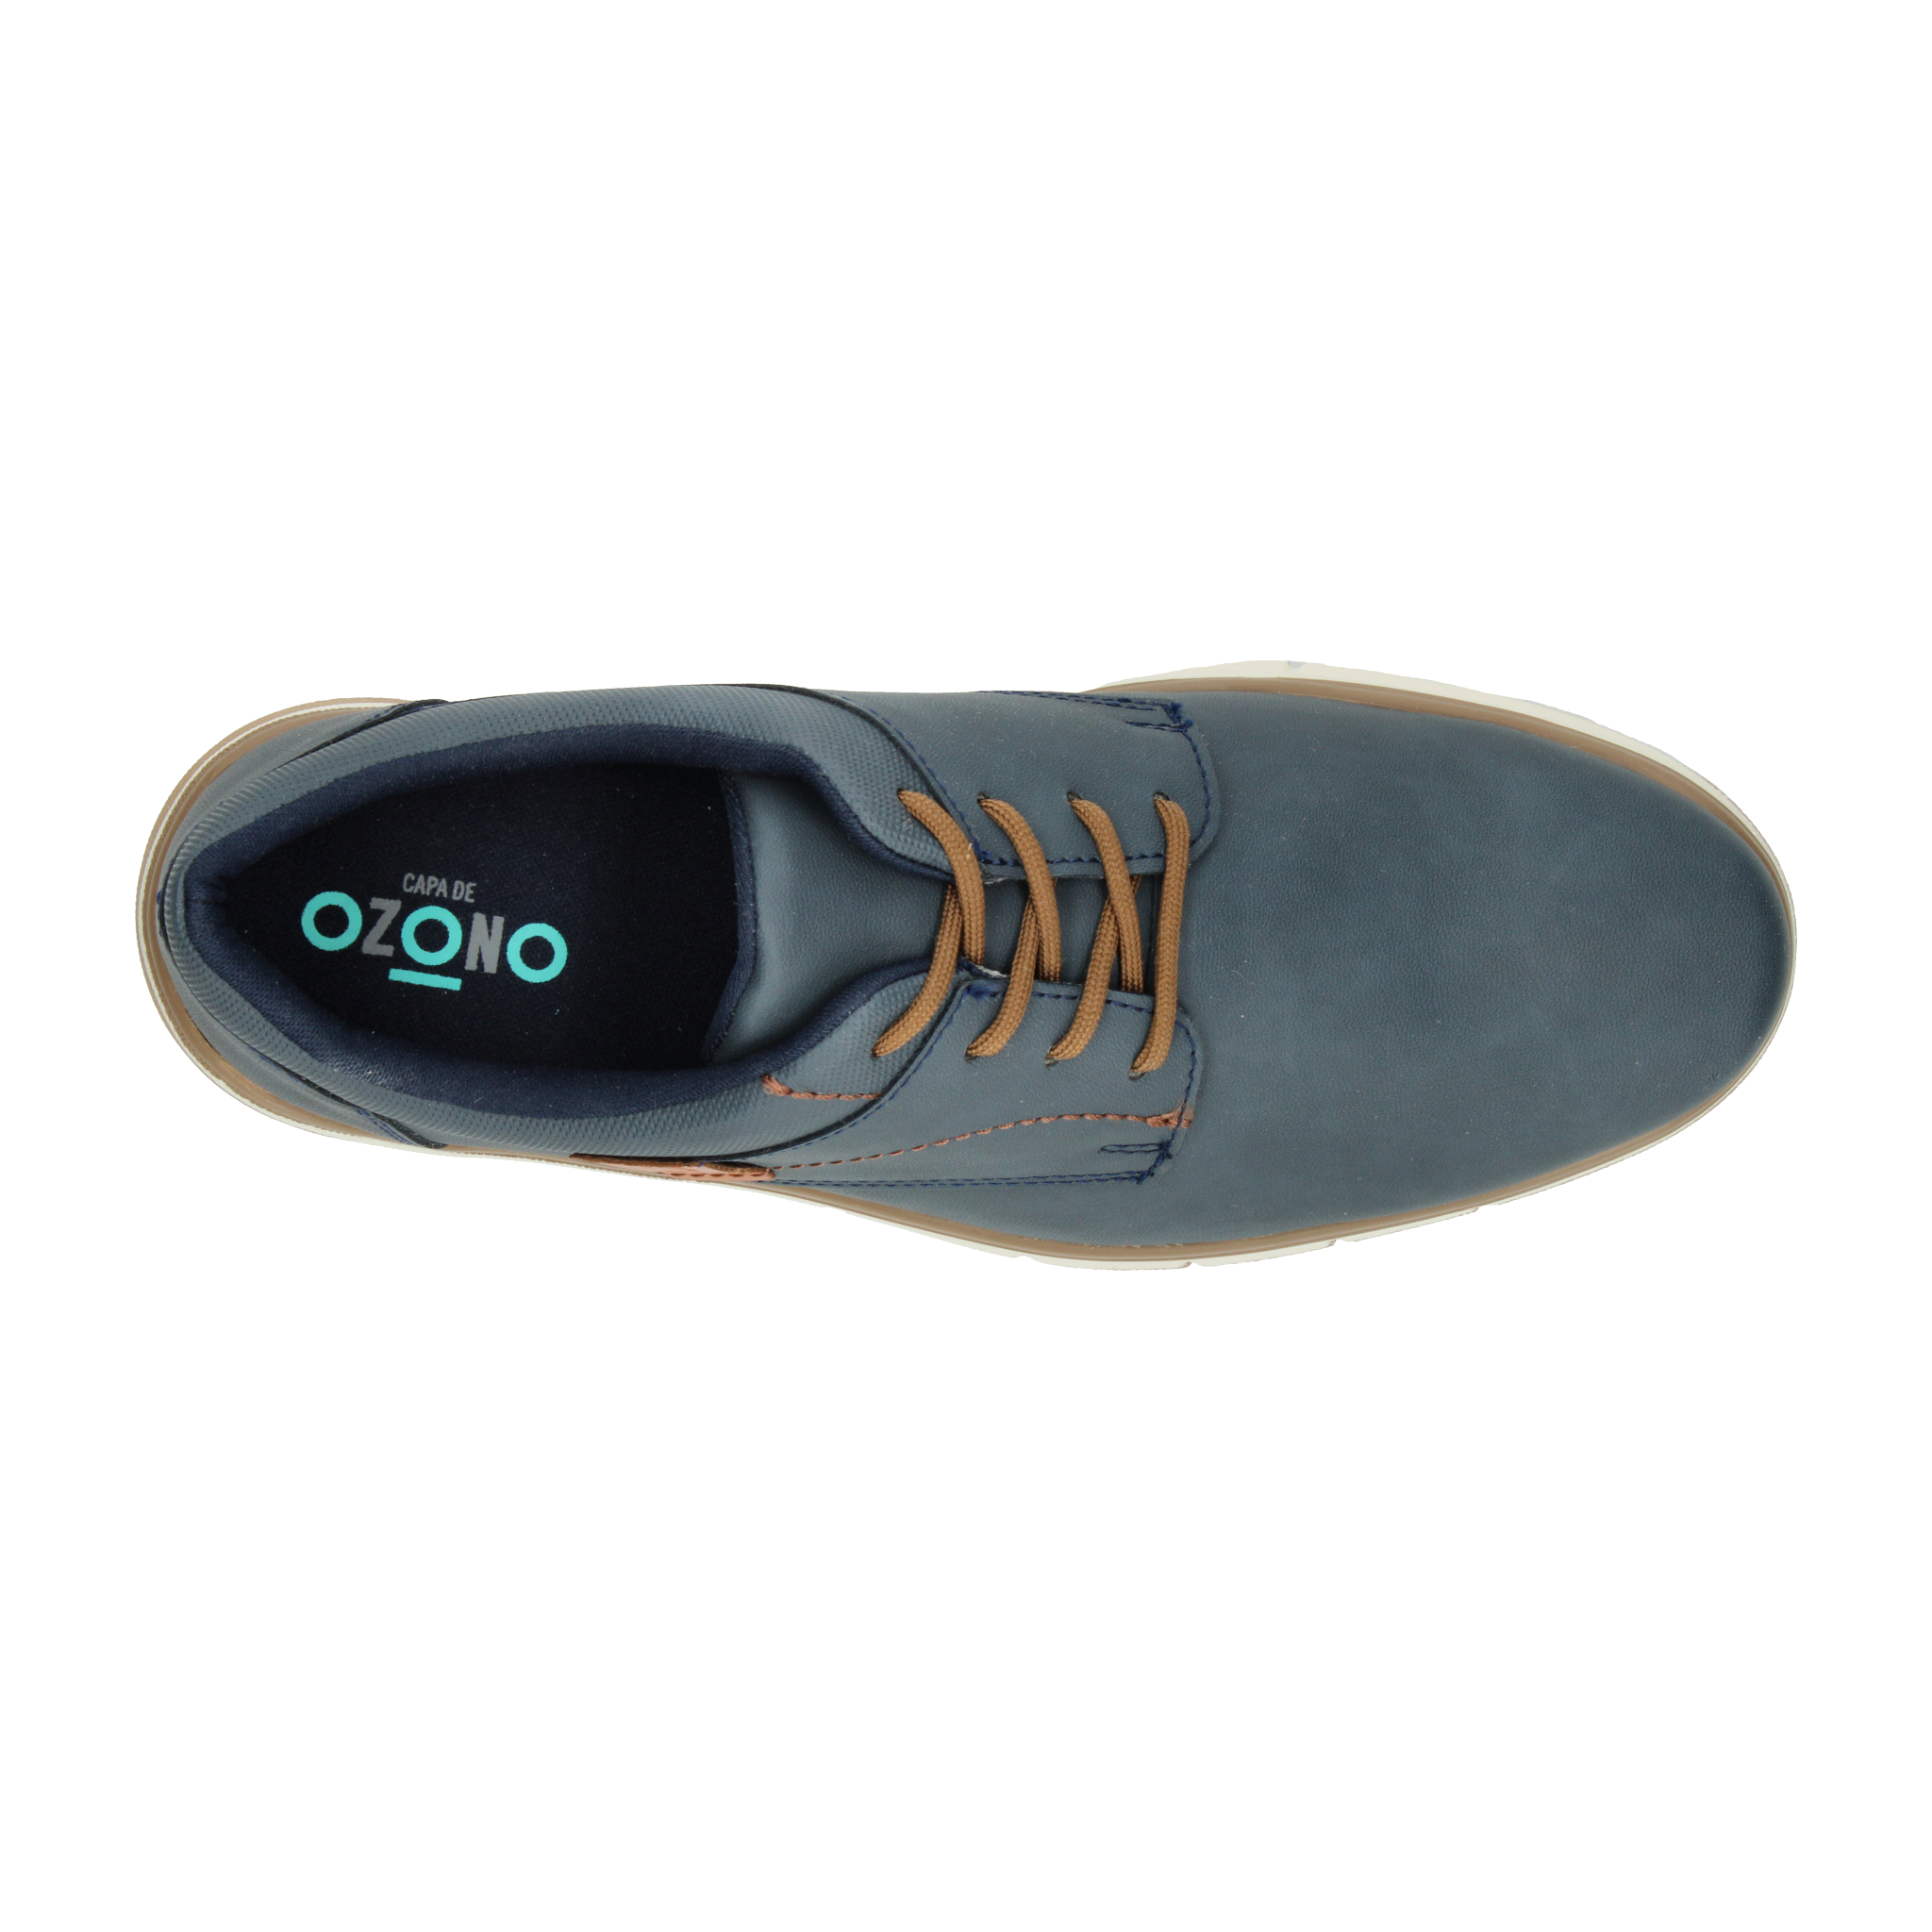 Zapato Casual Ozono Azul Marino para Hombre [OZO2912] - Zapaterias Torreon